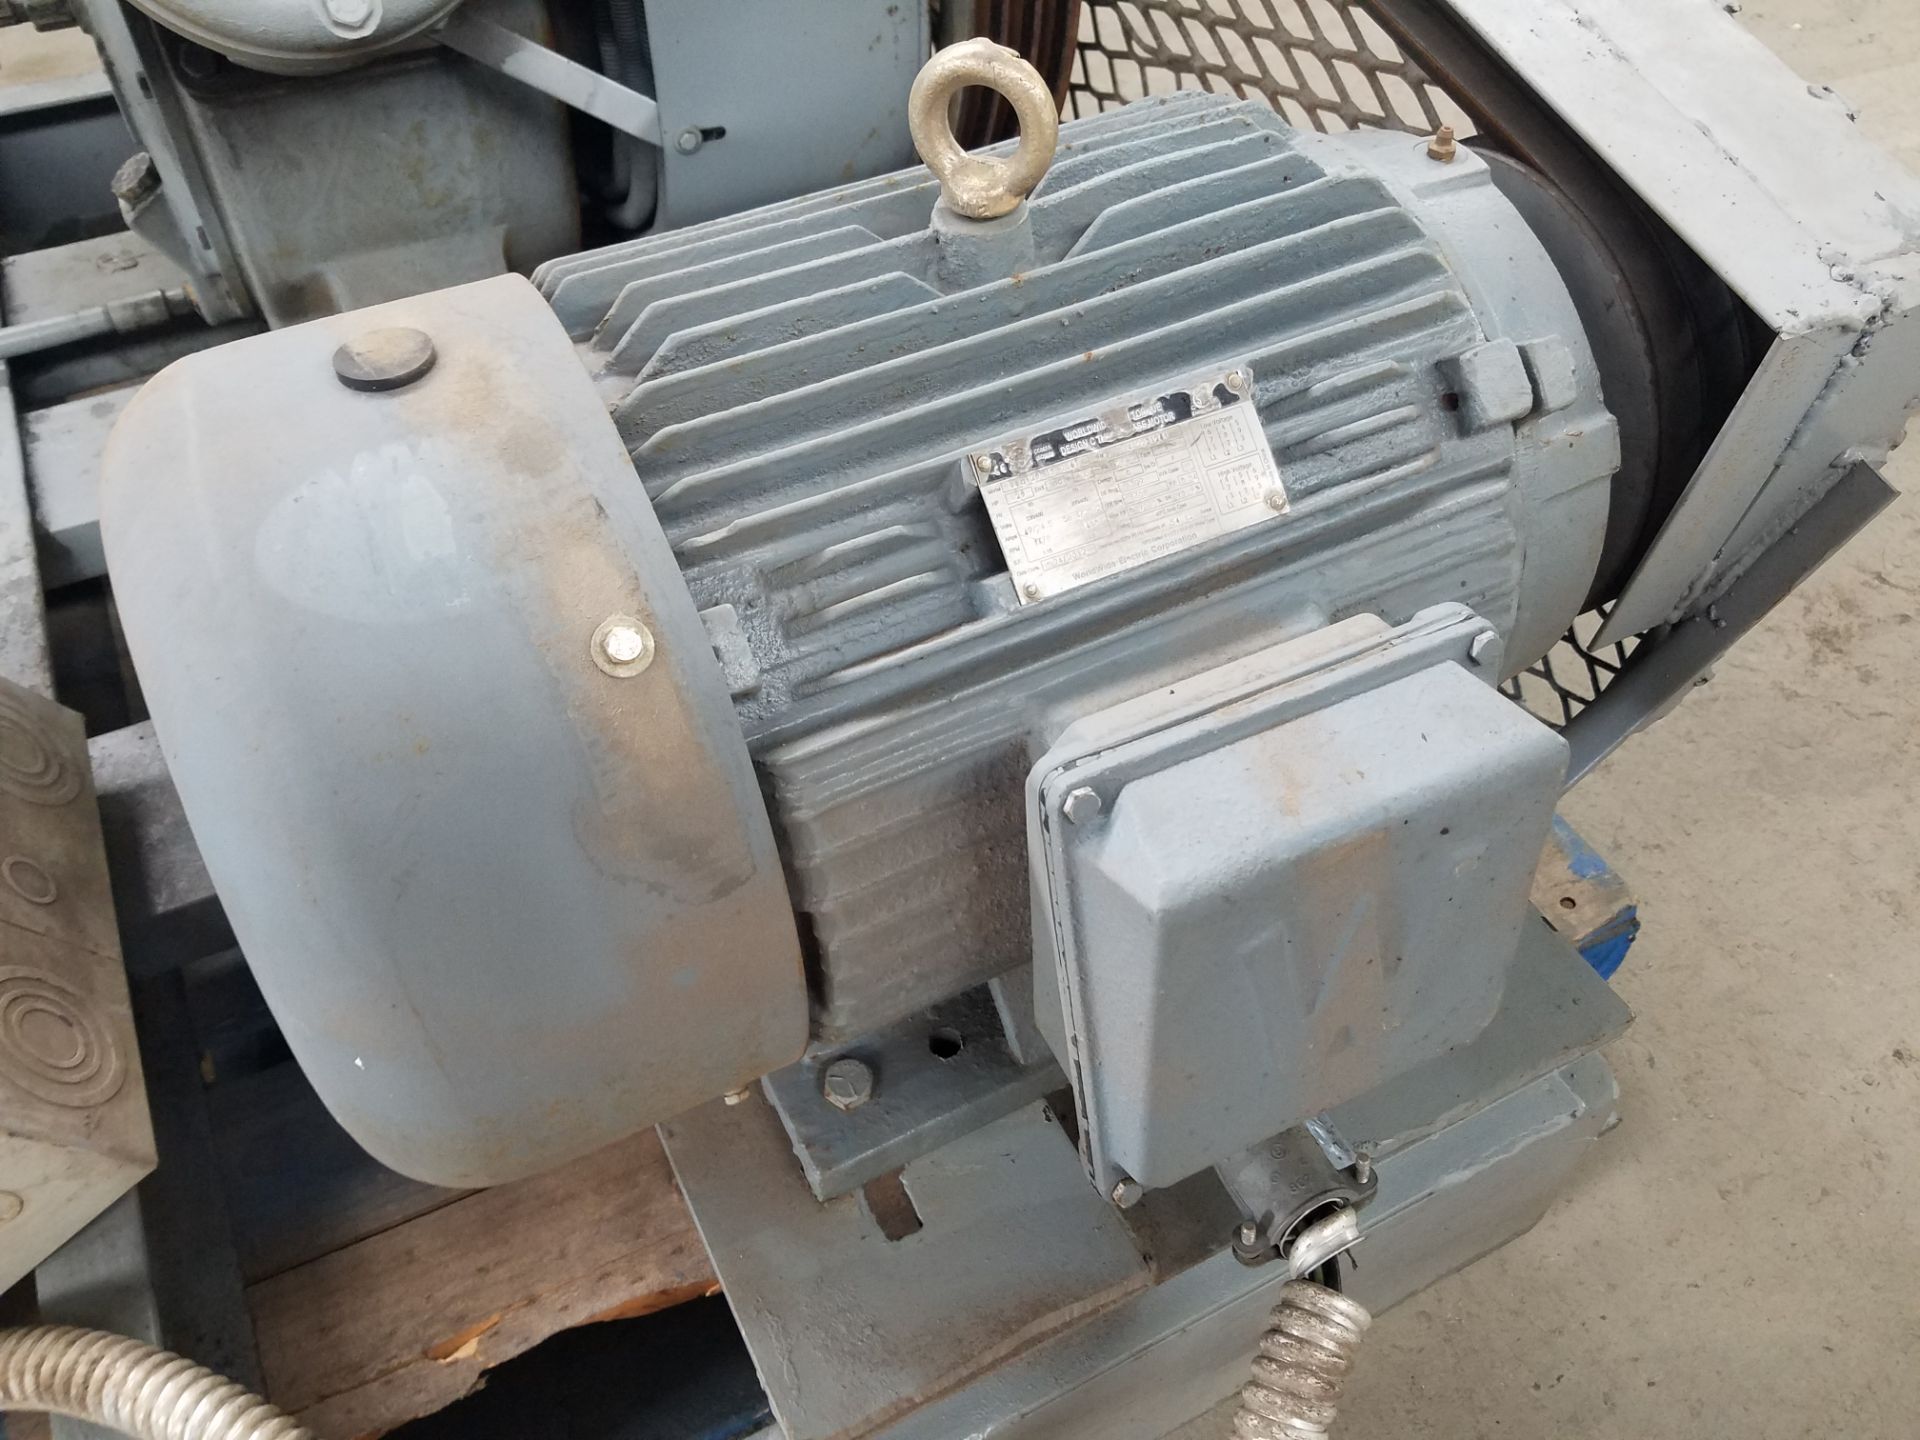 Ingersoll rand T20-15-256T air compressor,  20 hp., serial # 0412221241, volt 230/460, motor starter - Image 2 of 8